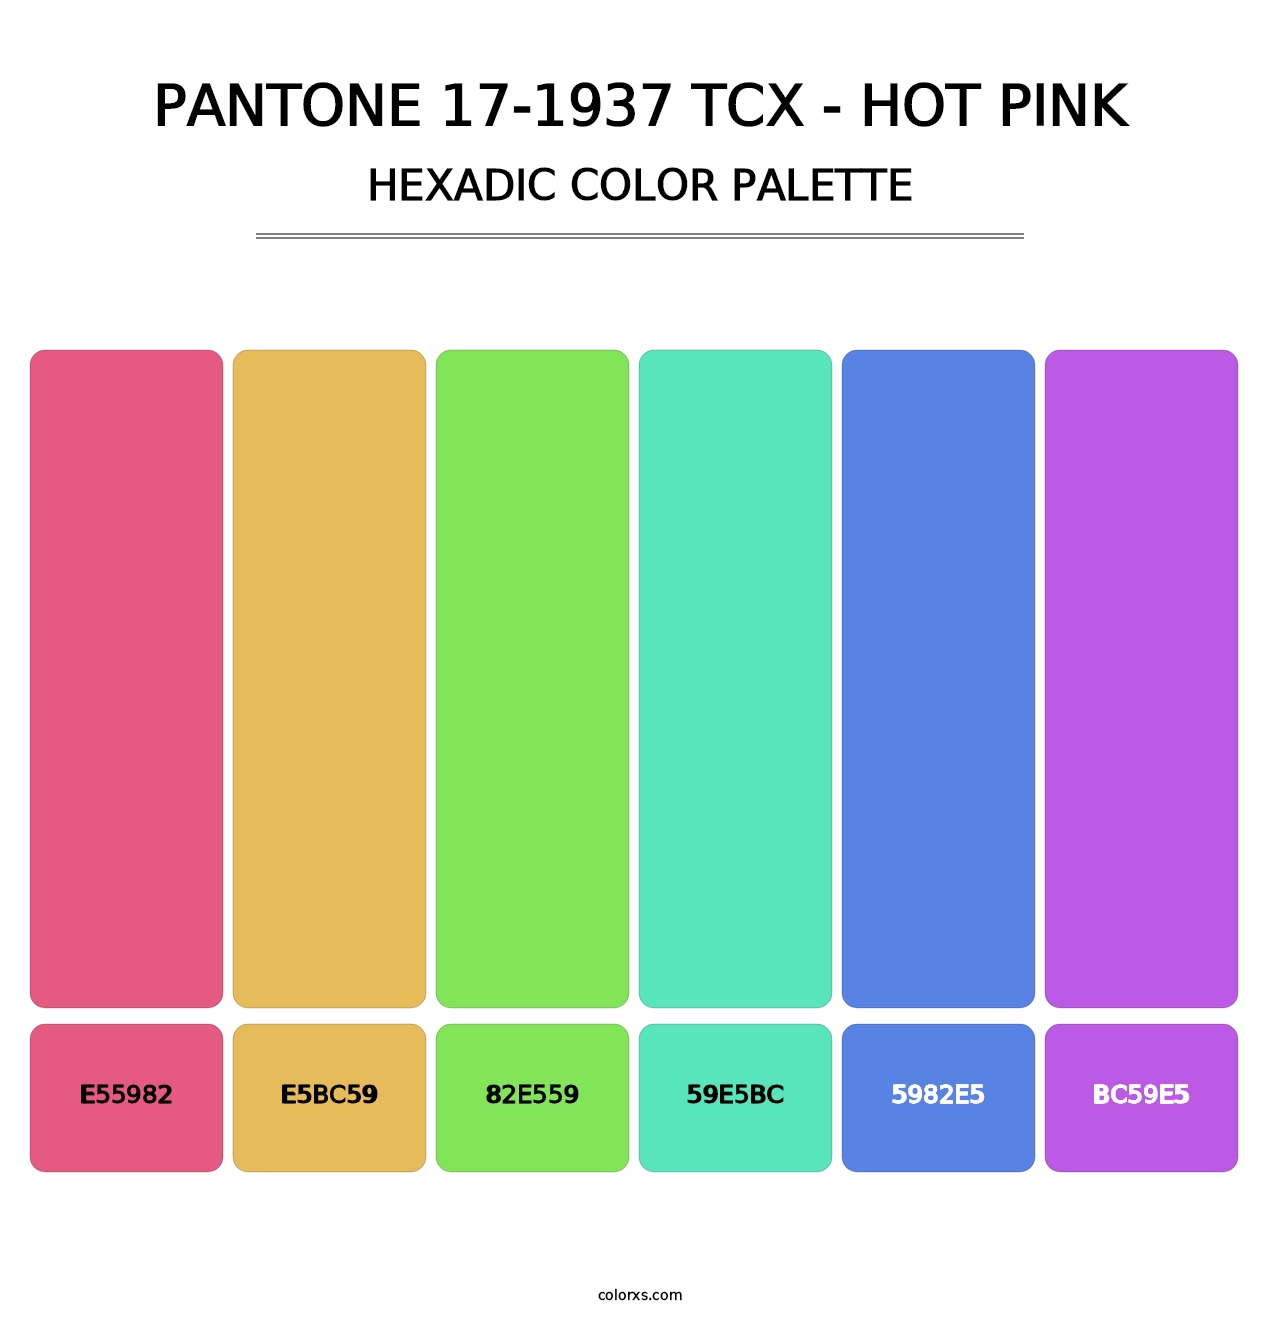 PANTONE 17-1937 TCX - Hot Pink - Hexadic Color Palette